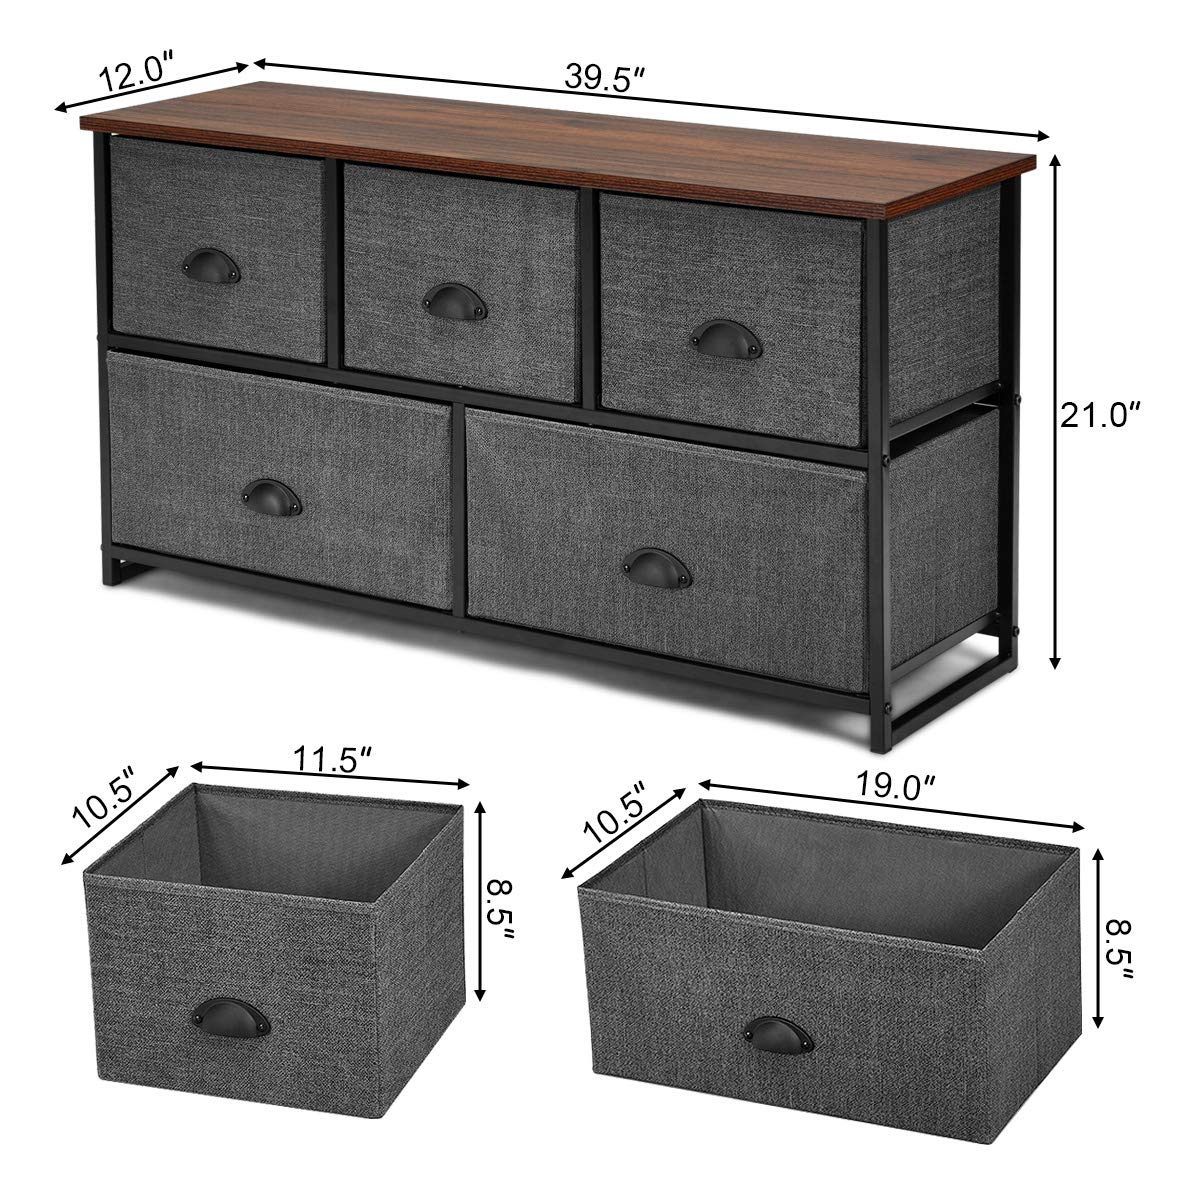 Giantex Dresser Storage Tower W/ 5 Foldable Cloth Storage Cubes